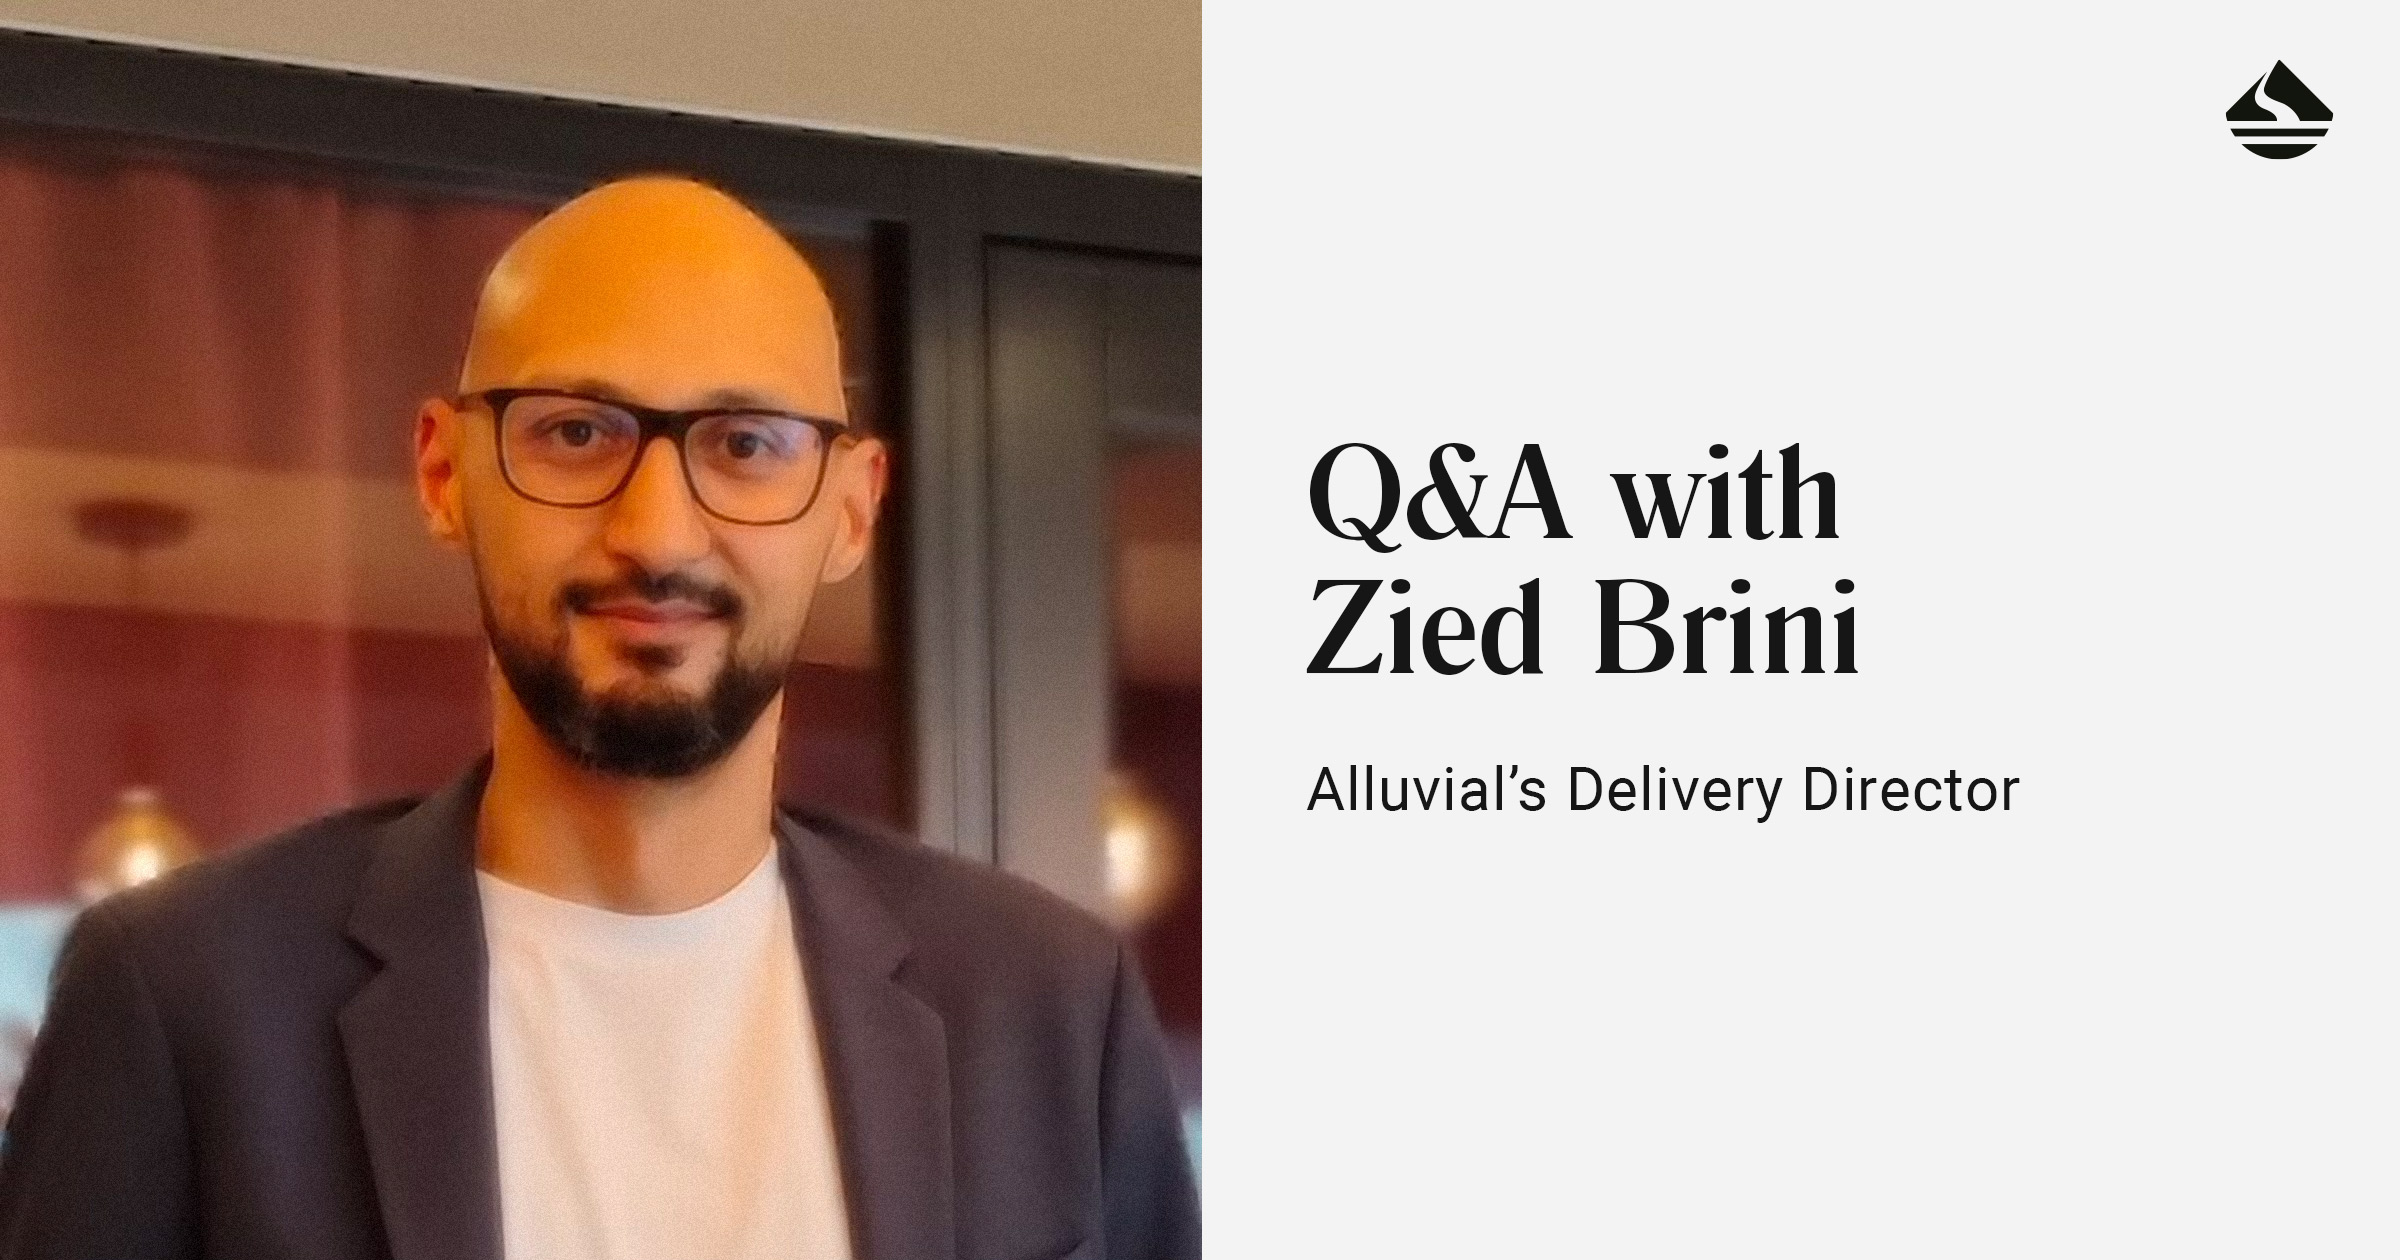 Q&A with Zied Brini, Alluvial